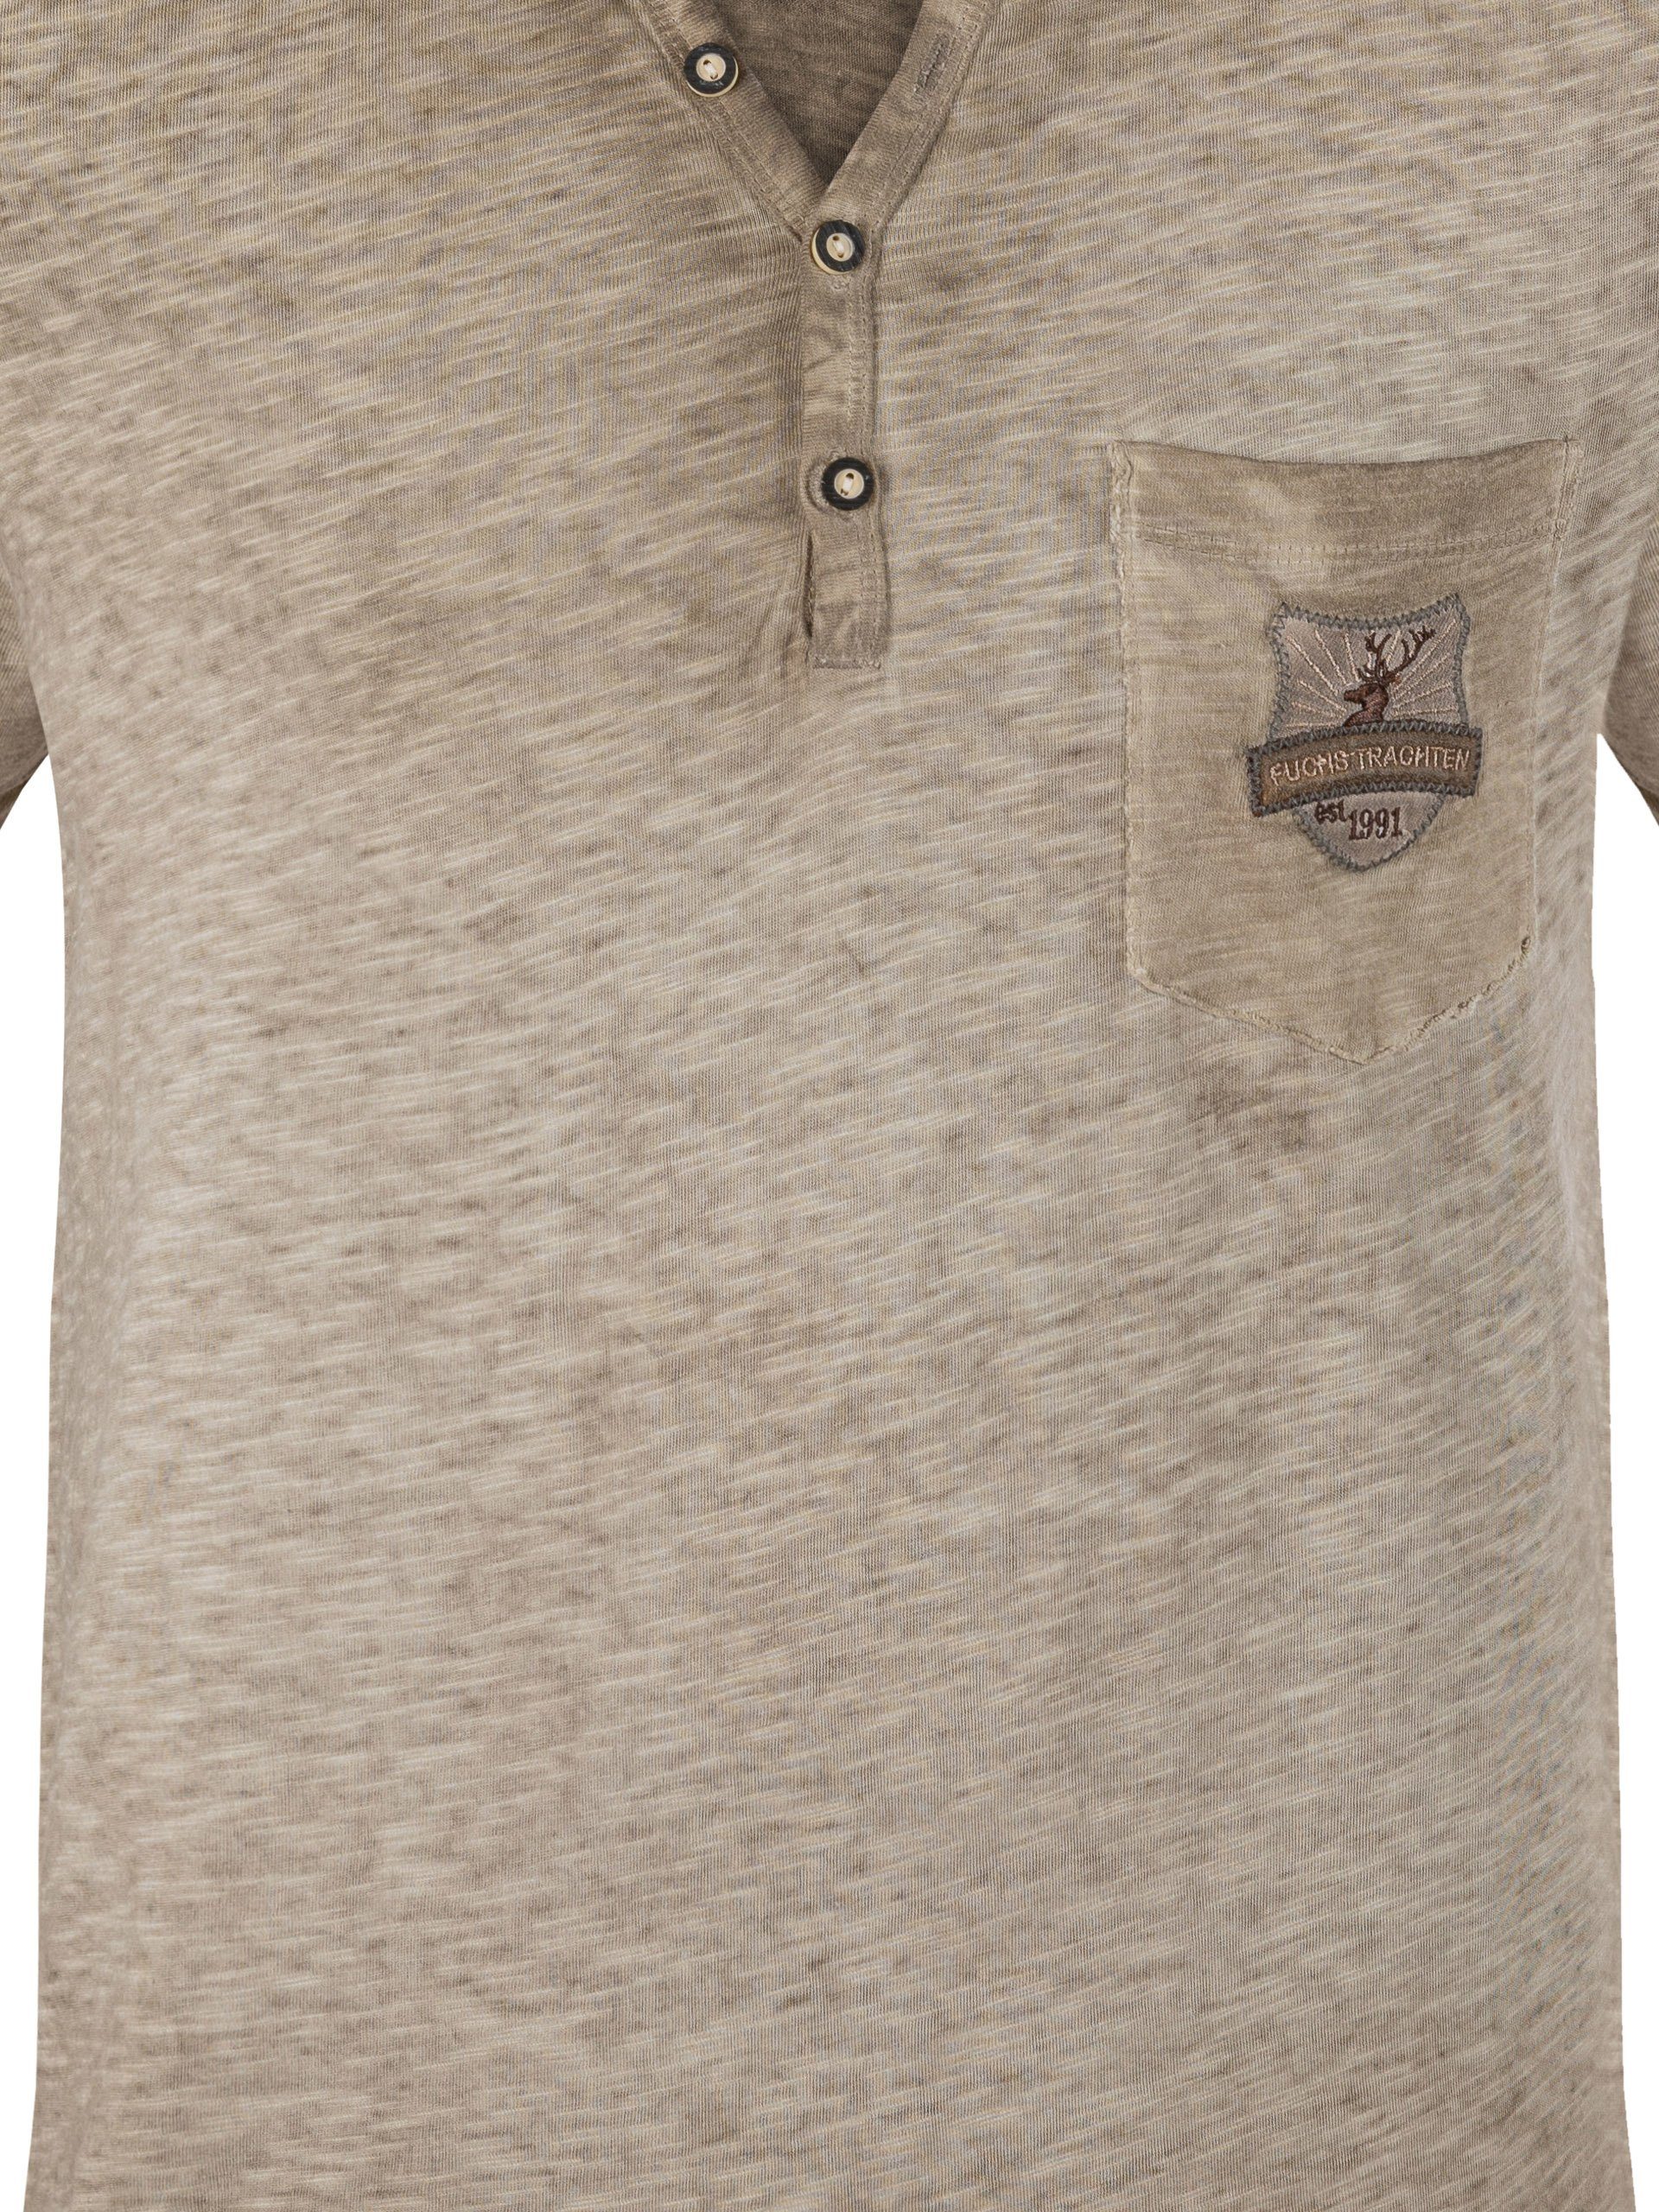 FUCHS T-Shirt Trachten T-Shirt % Theo aus Baumwolle sand 100